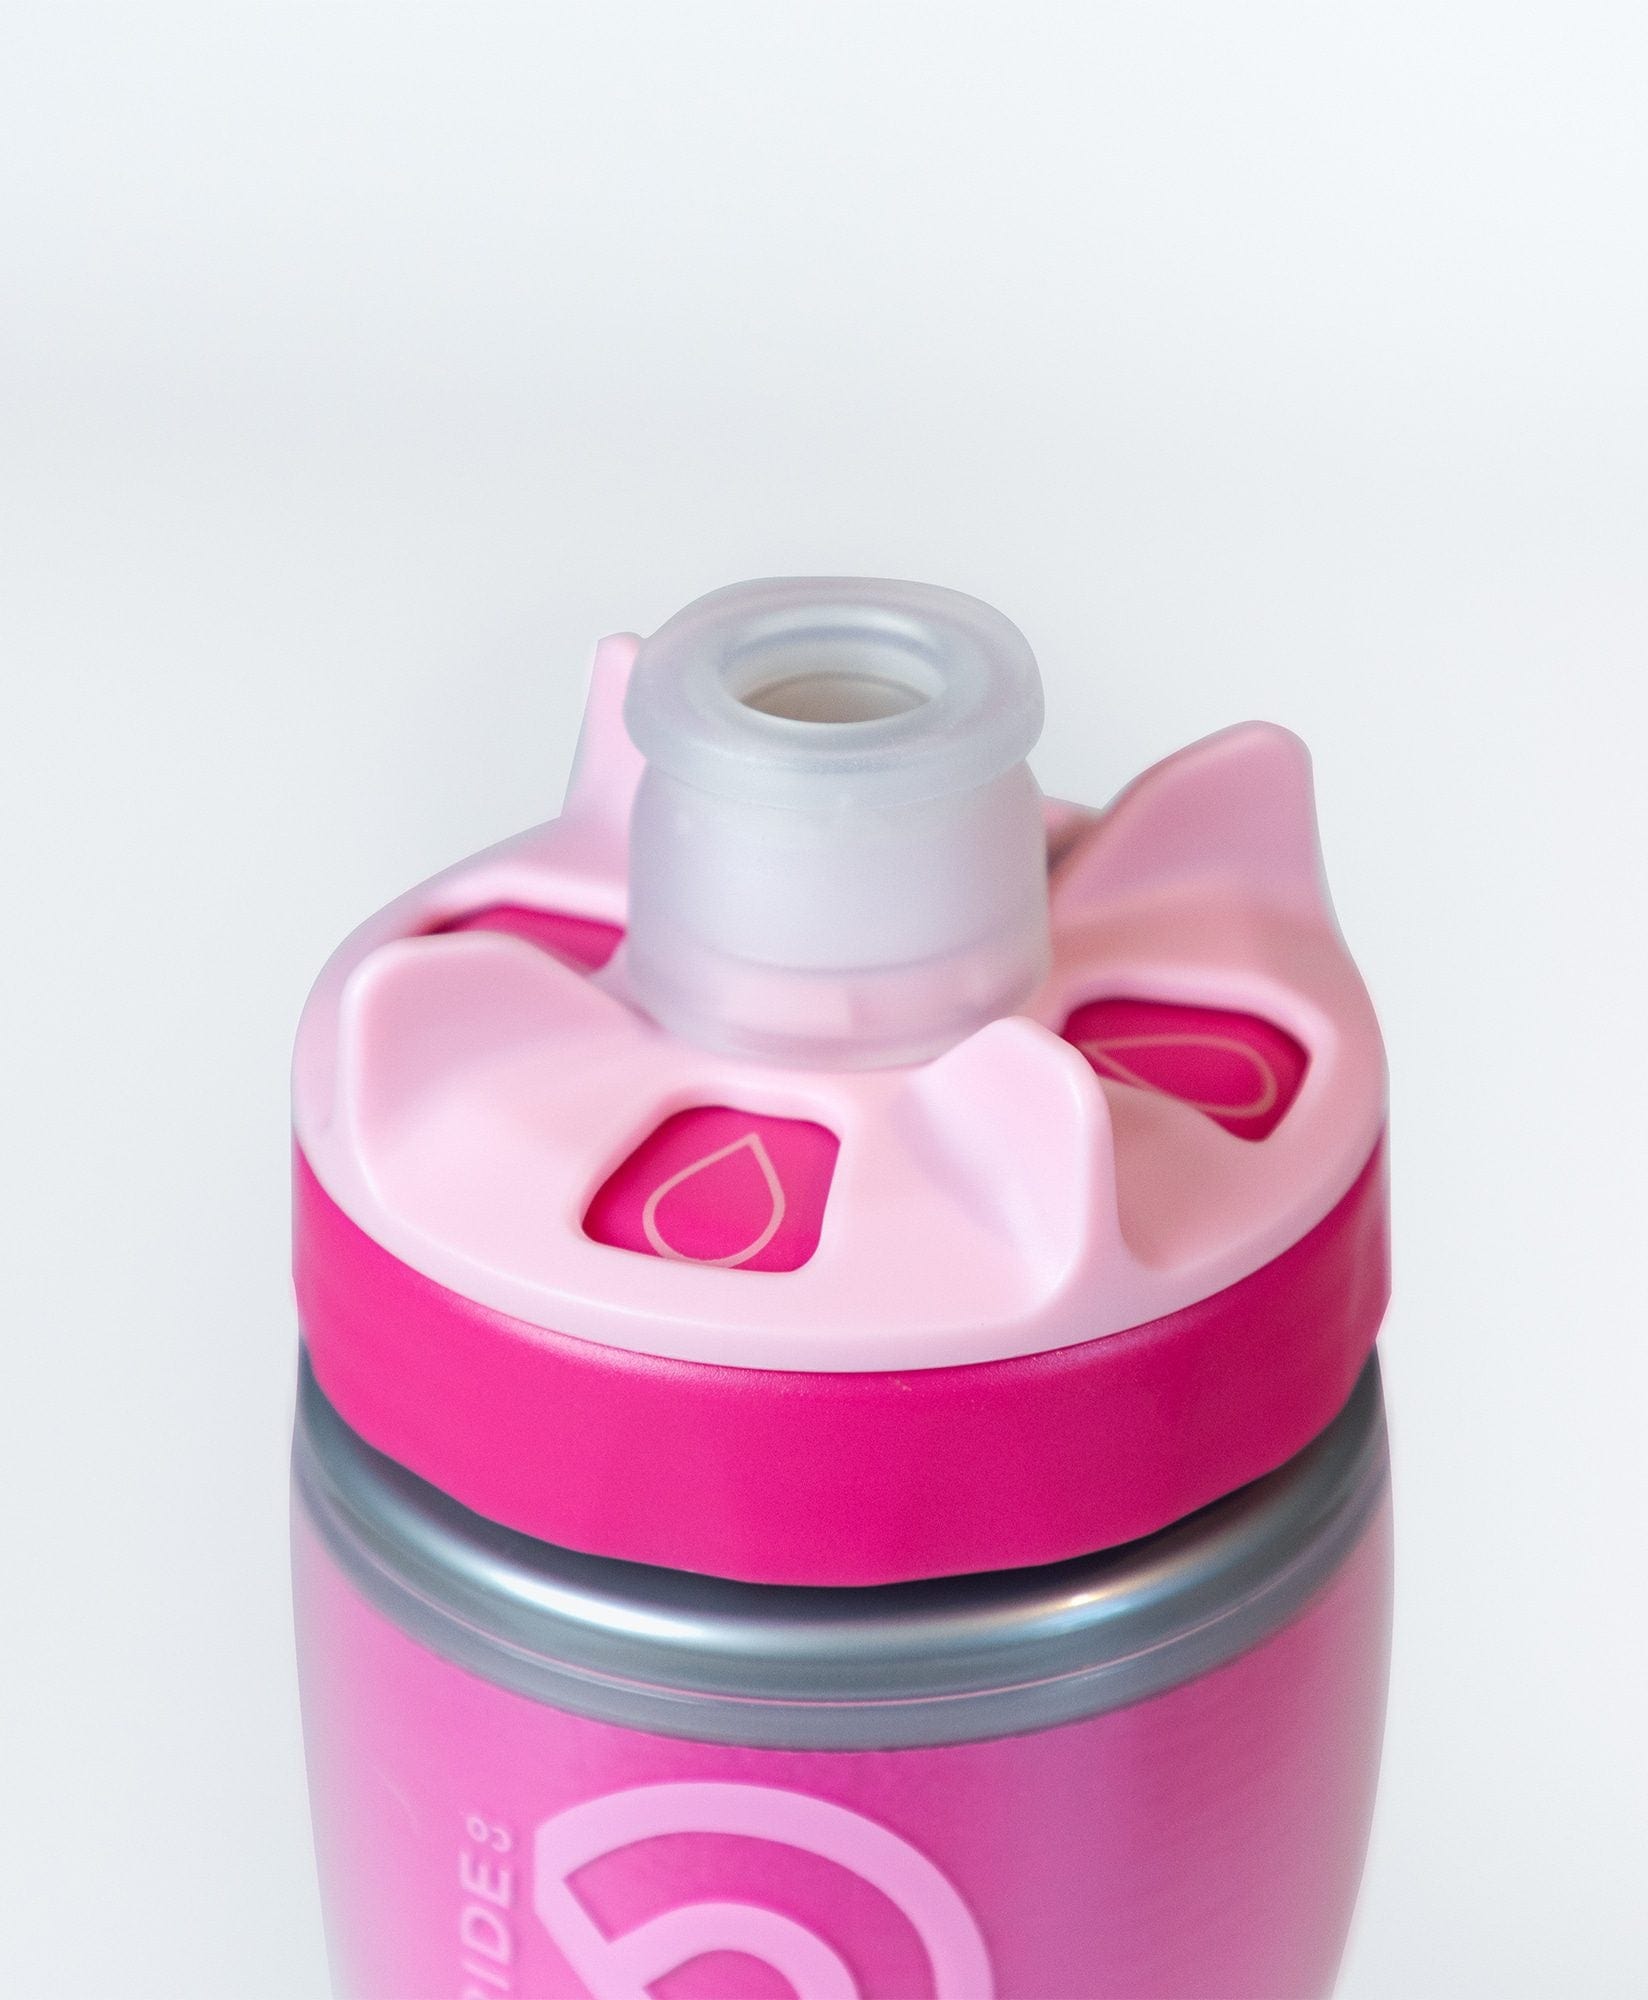 JolieRide Pink Water Bottle Pink Nero Frio